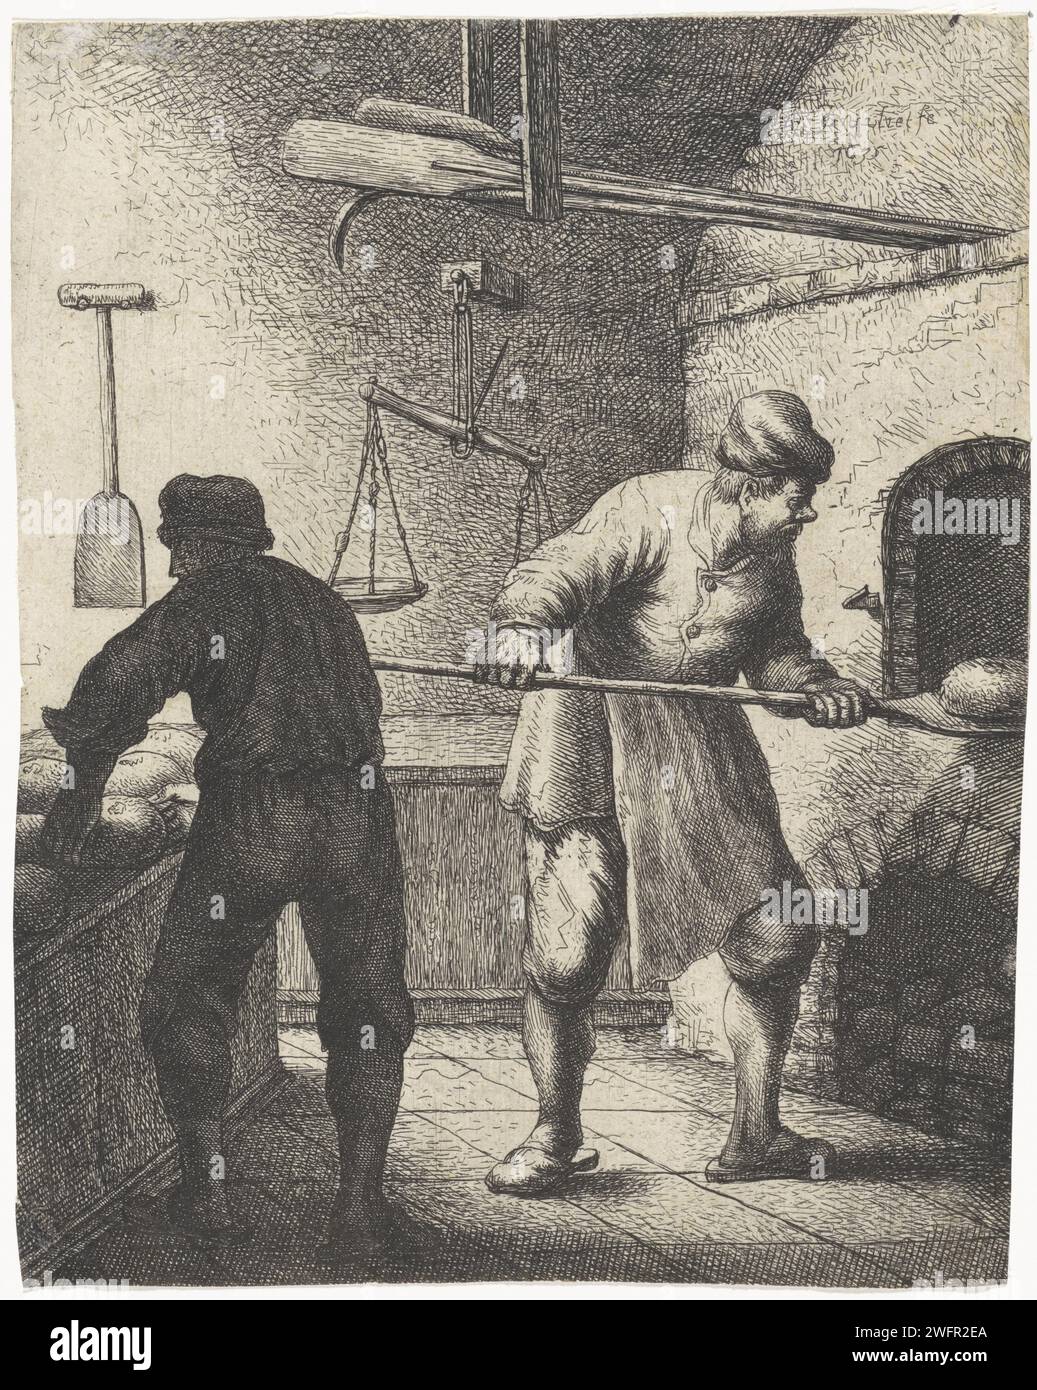 Bakker, Jan Gillisz. Van Vliet, 1635 imprimer Leiden papier gravure / gravure boulanger Banque D'Images